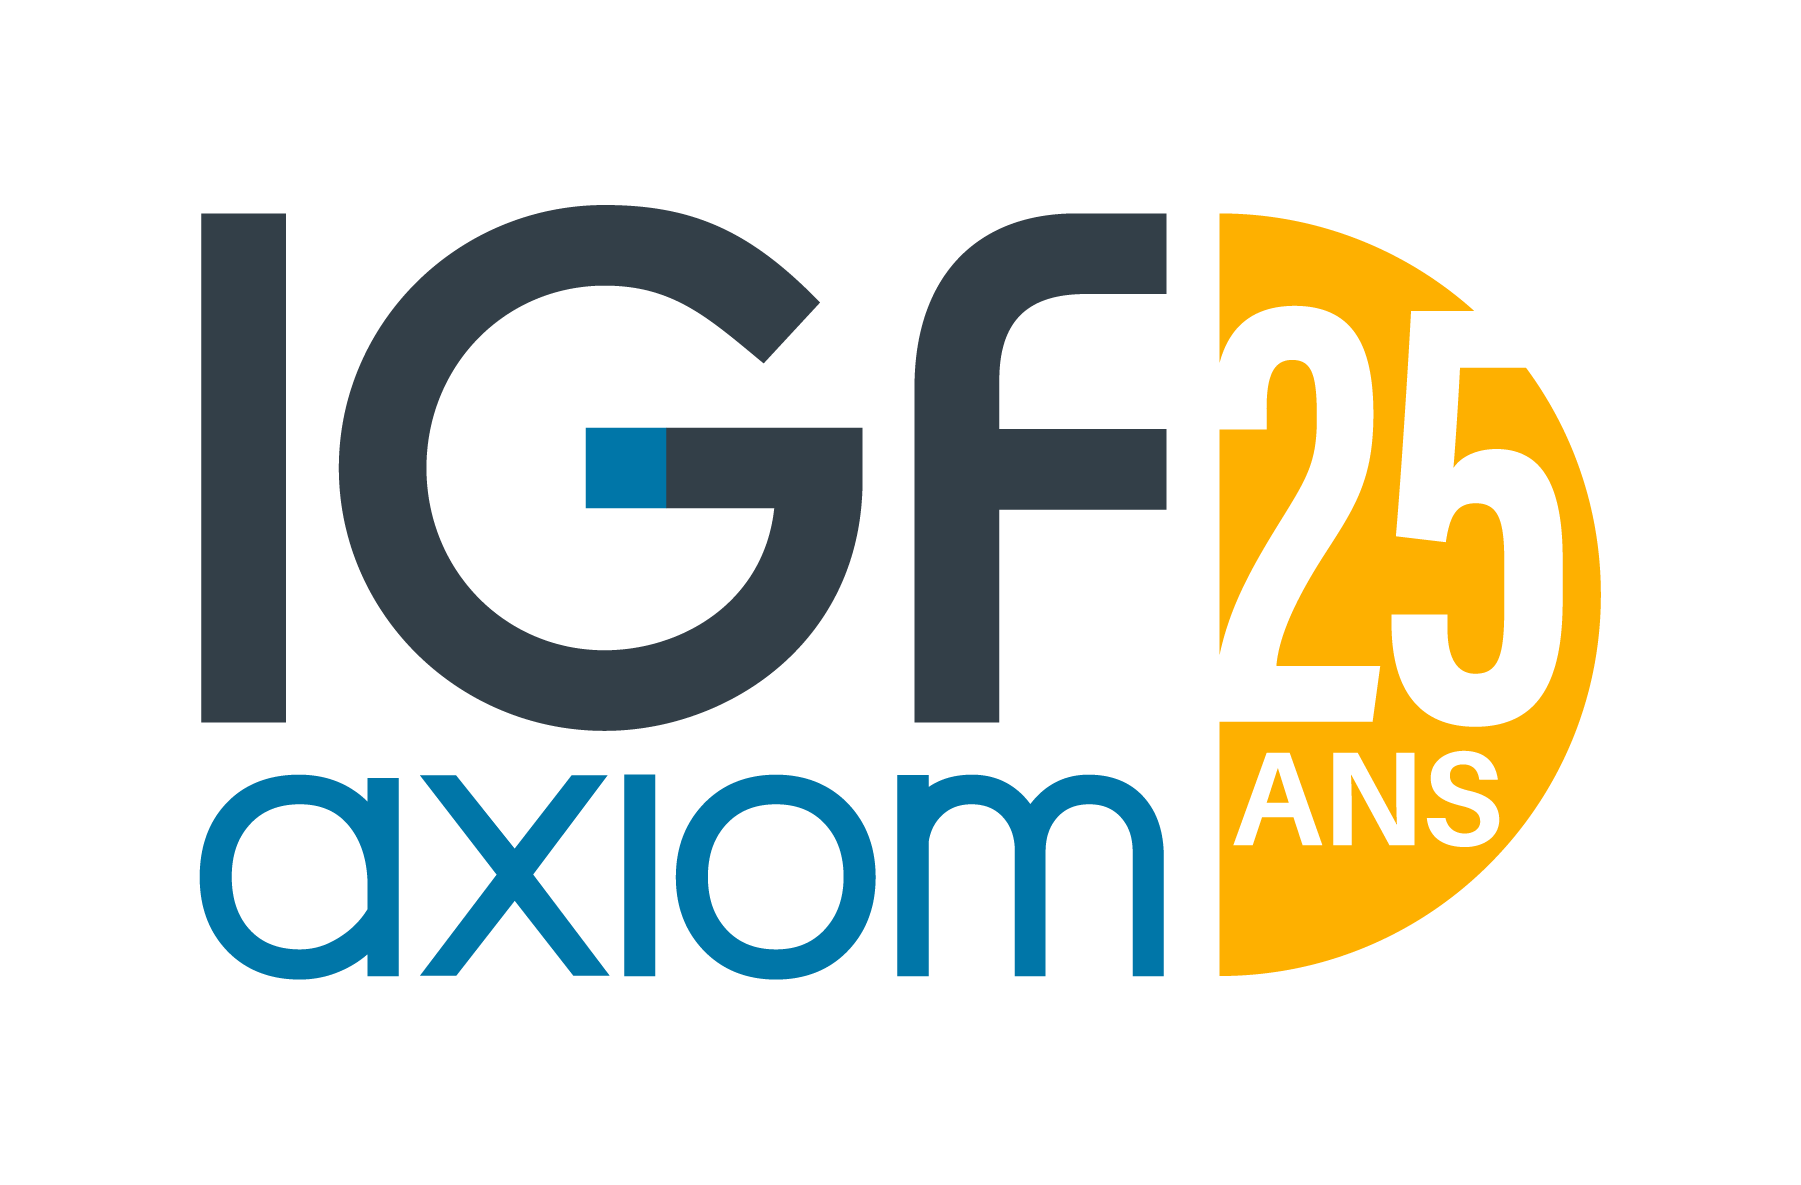 IGF Axiom